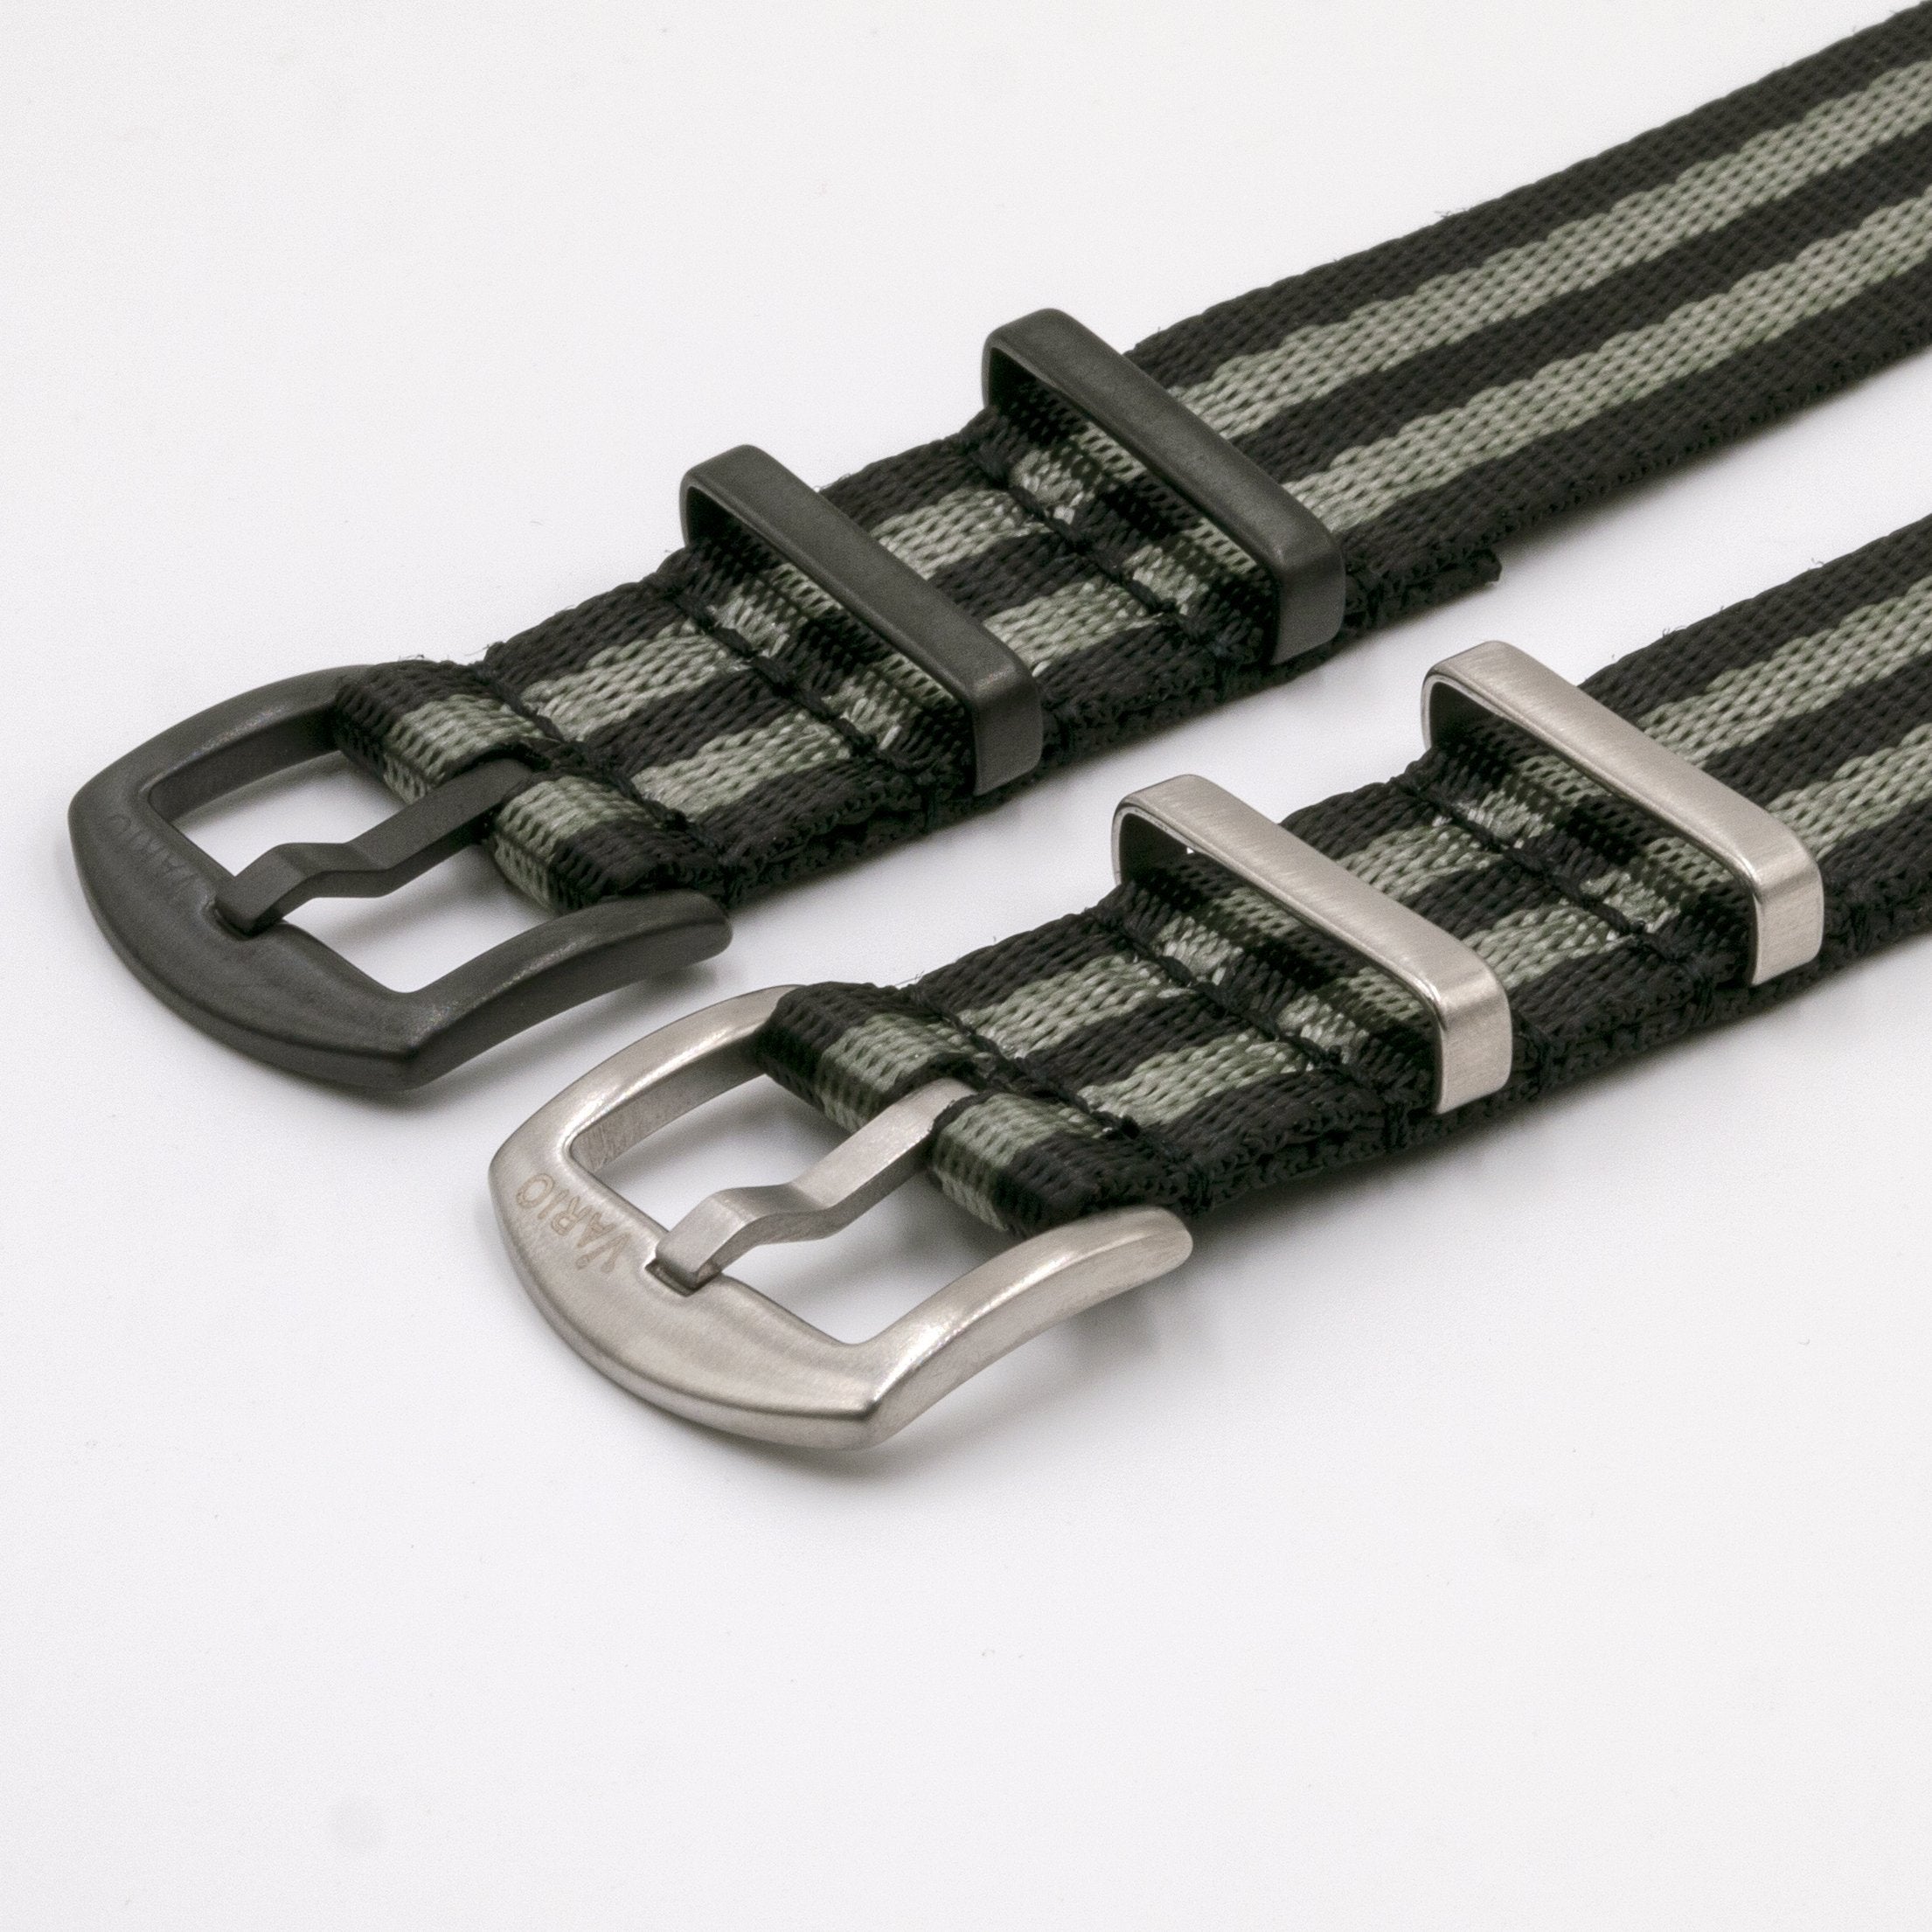 vario gshock seat belt adapter kit grey and black stripe bond